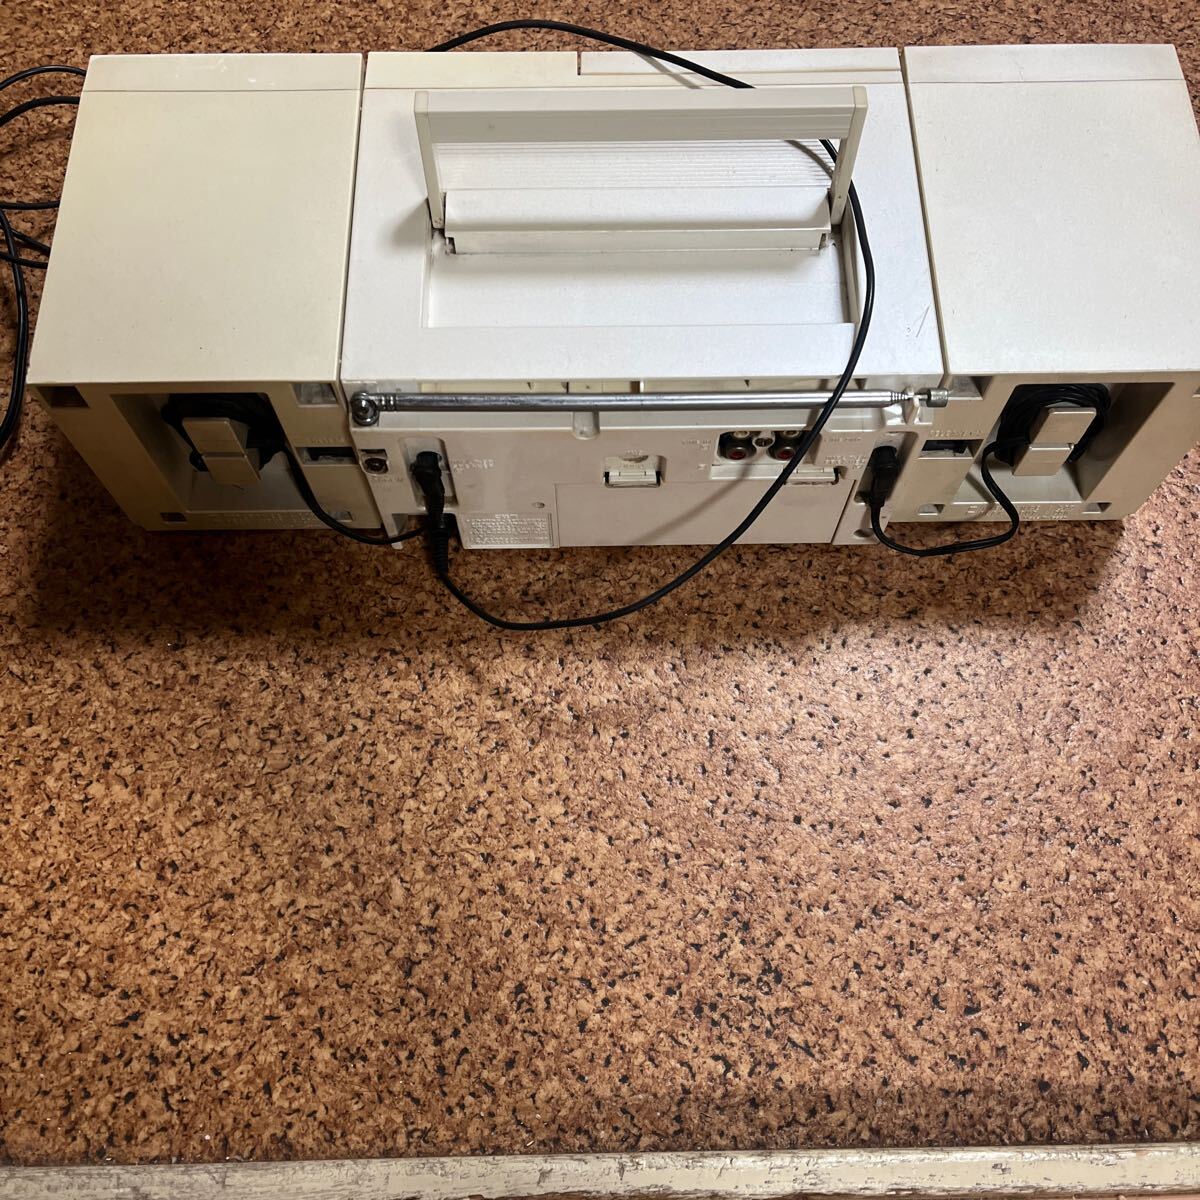 National ラジオカセットレコーダー レトロ RX-C20 アダプター使用しラジオ視聴、カセットテープ音でました 電池駆動未確認 ジャンク扱いの画像5